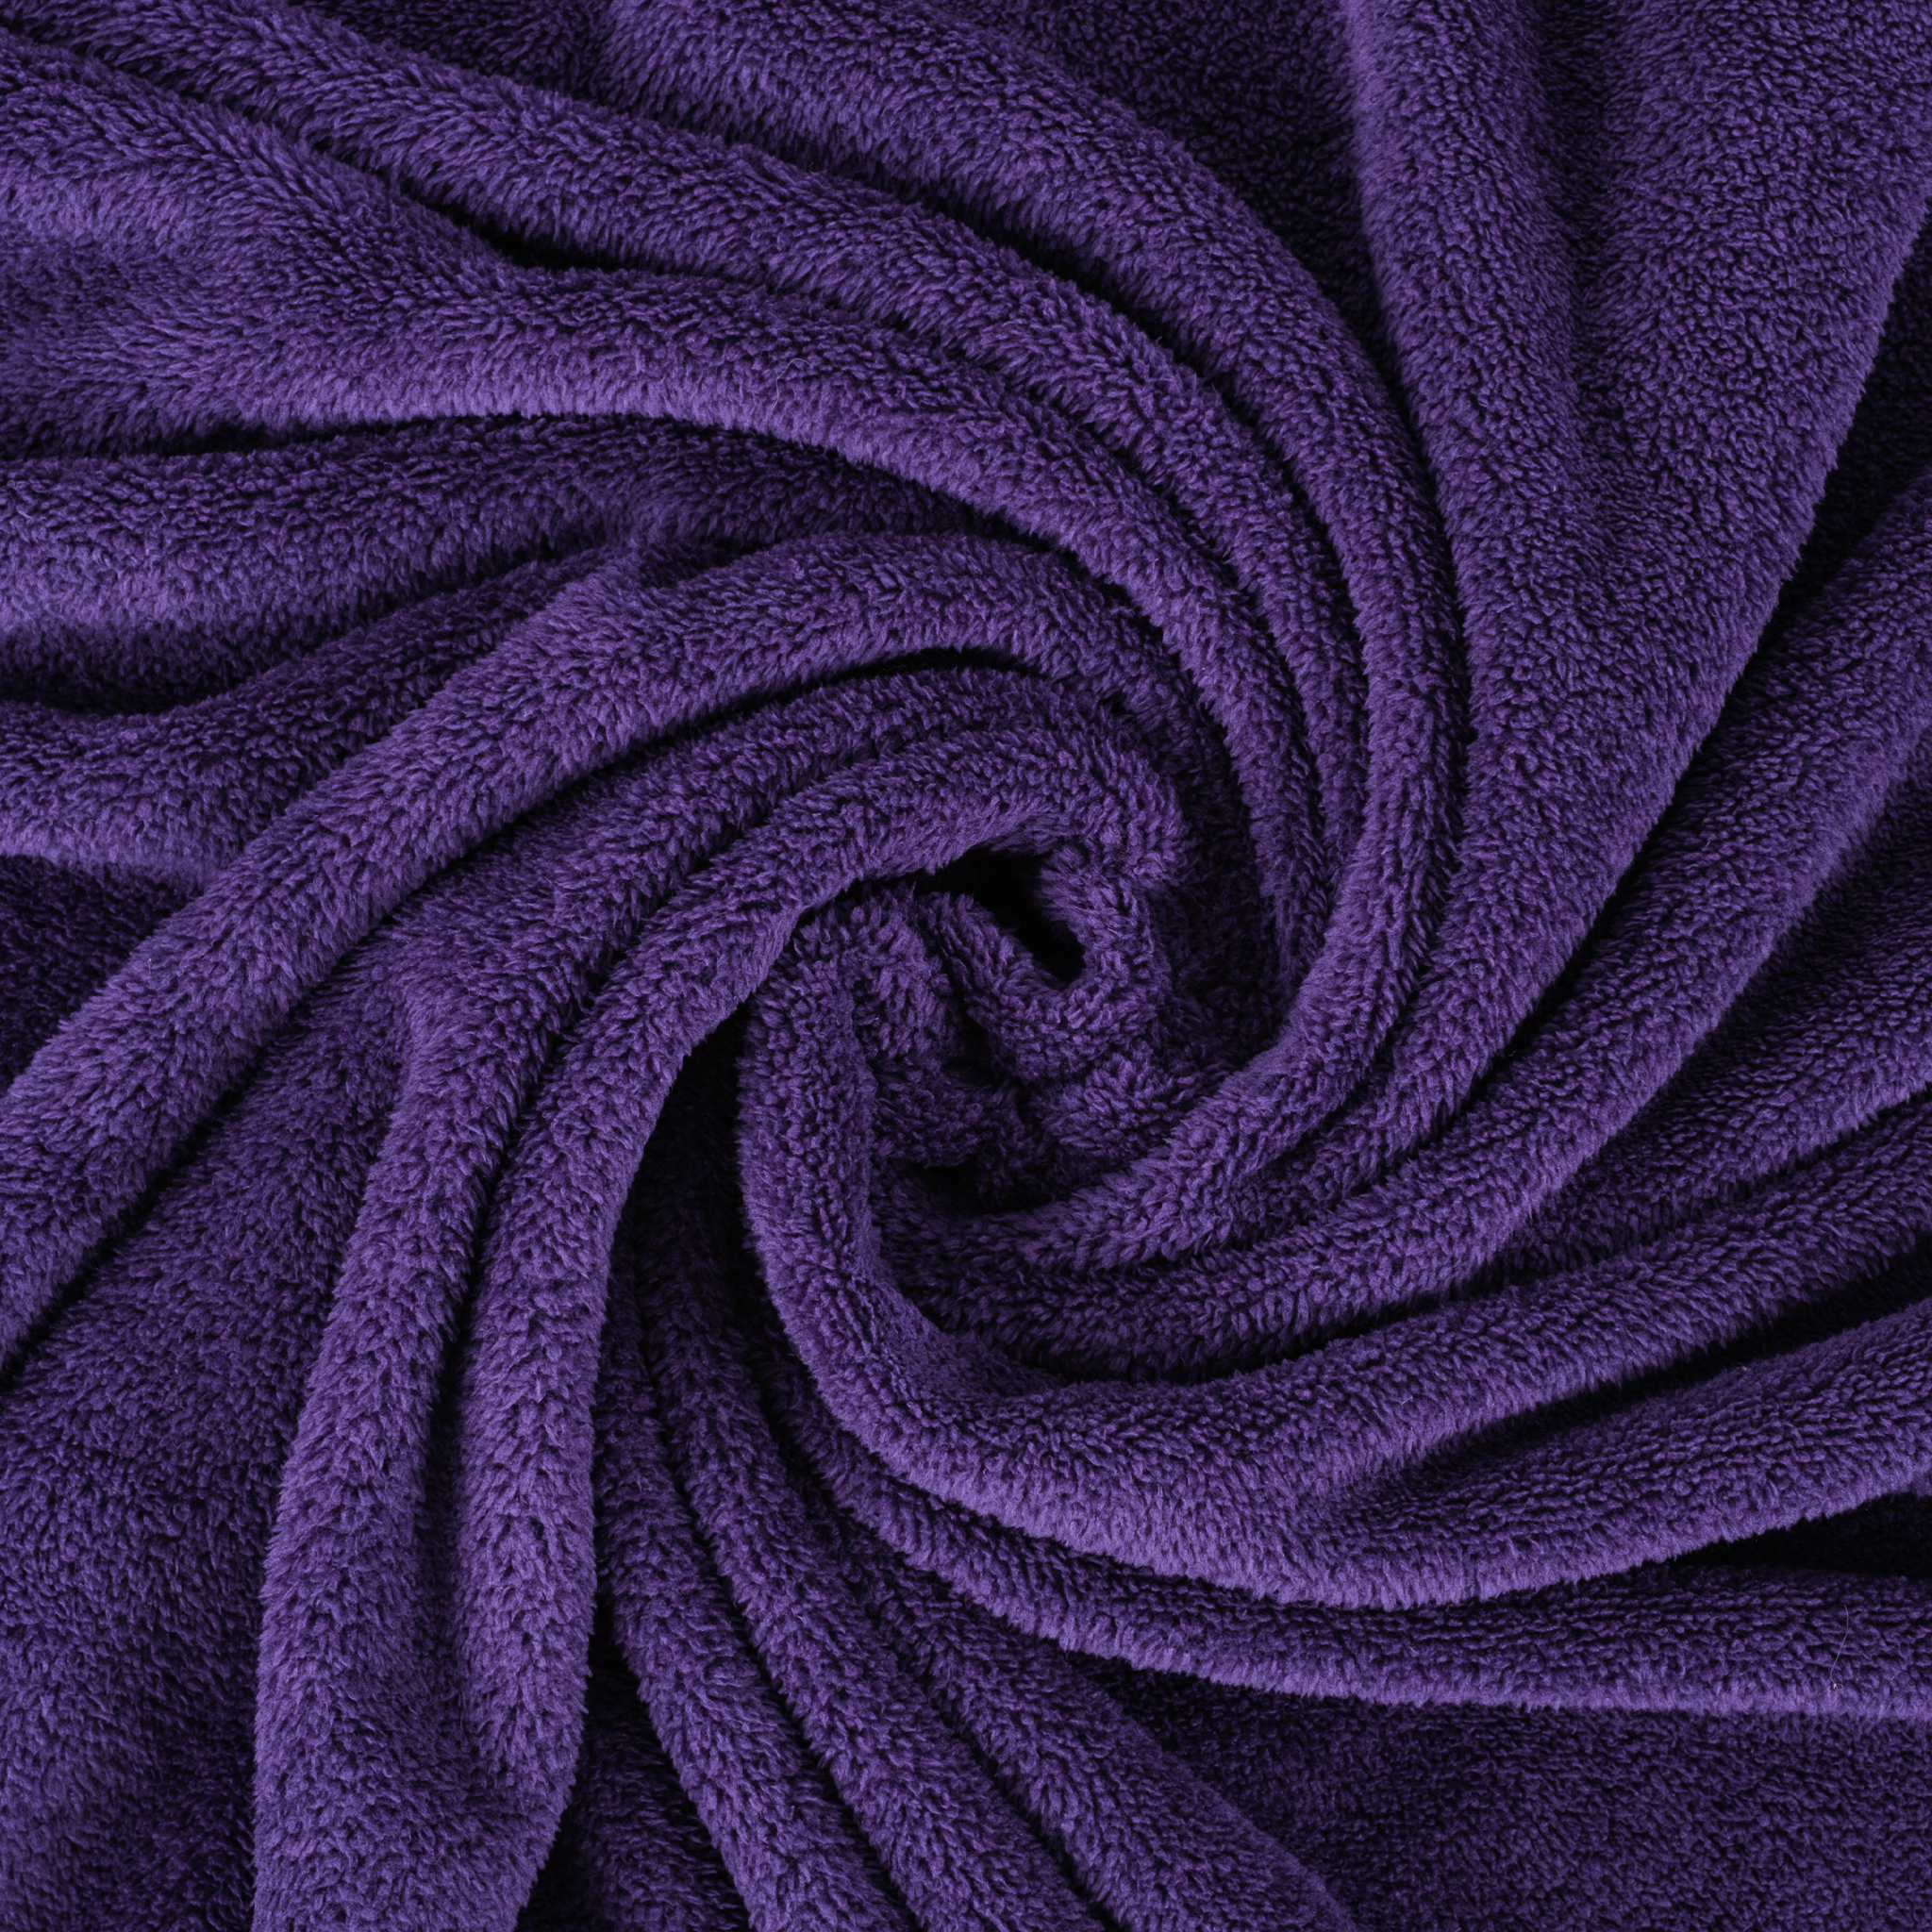 American Soft Linen - Bedding Fleece Blanket - Twin Size 60x80 inches - Purple - 5